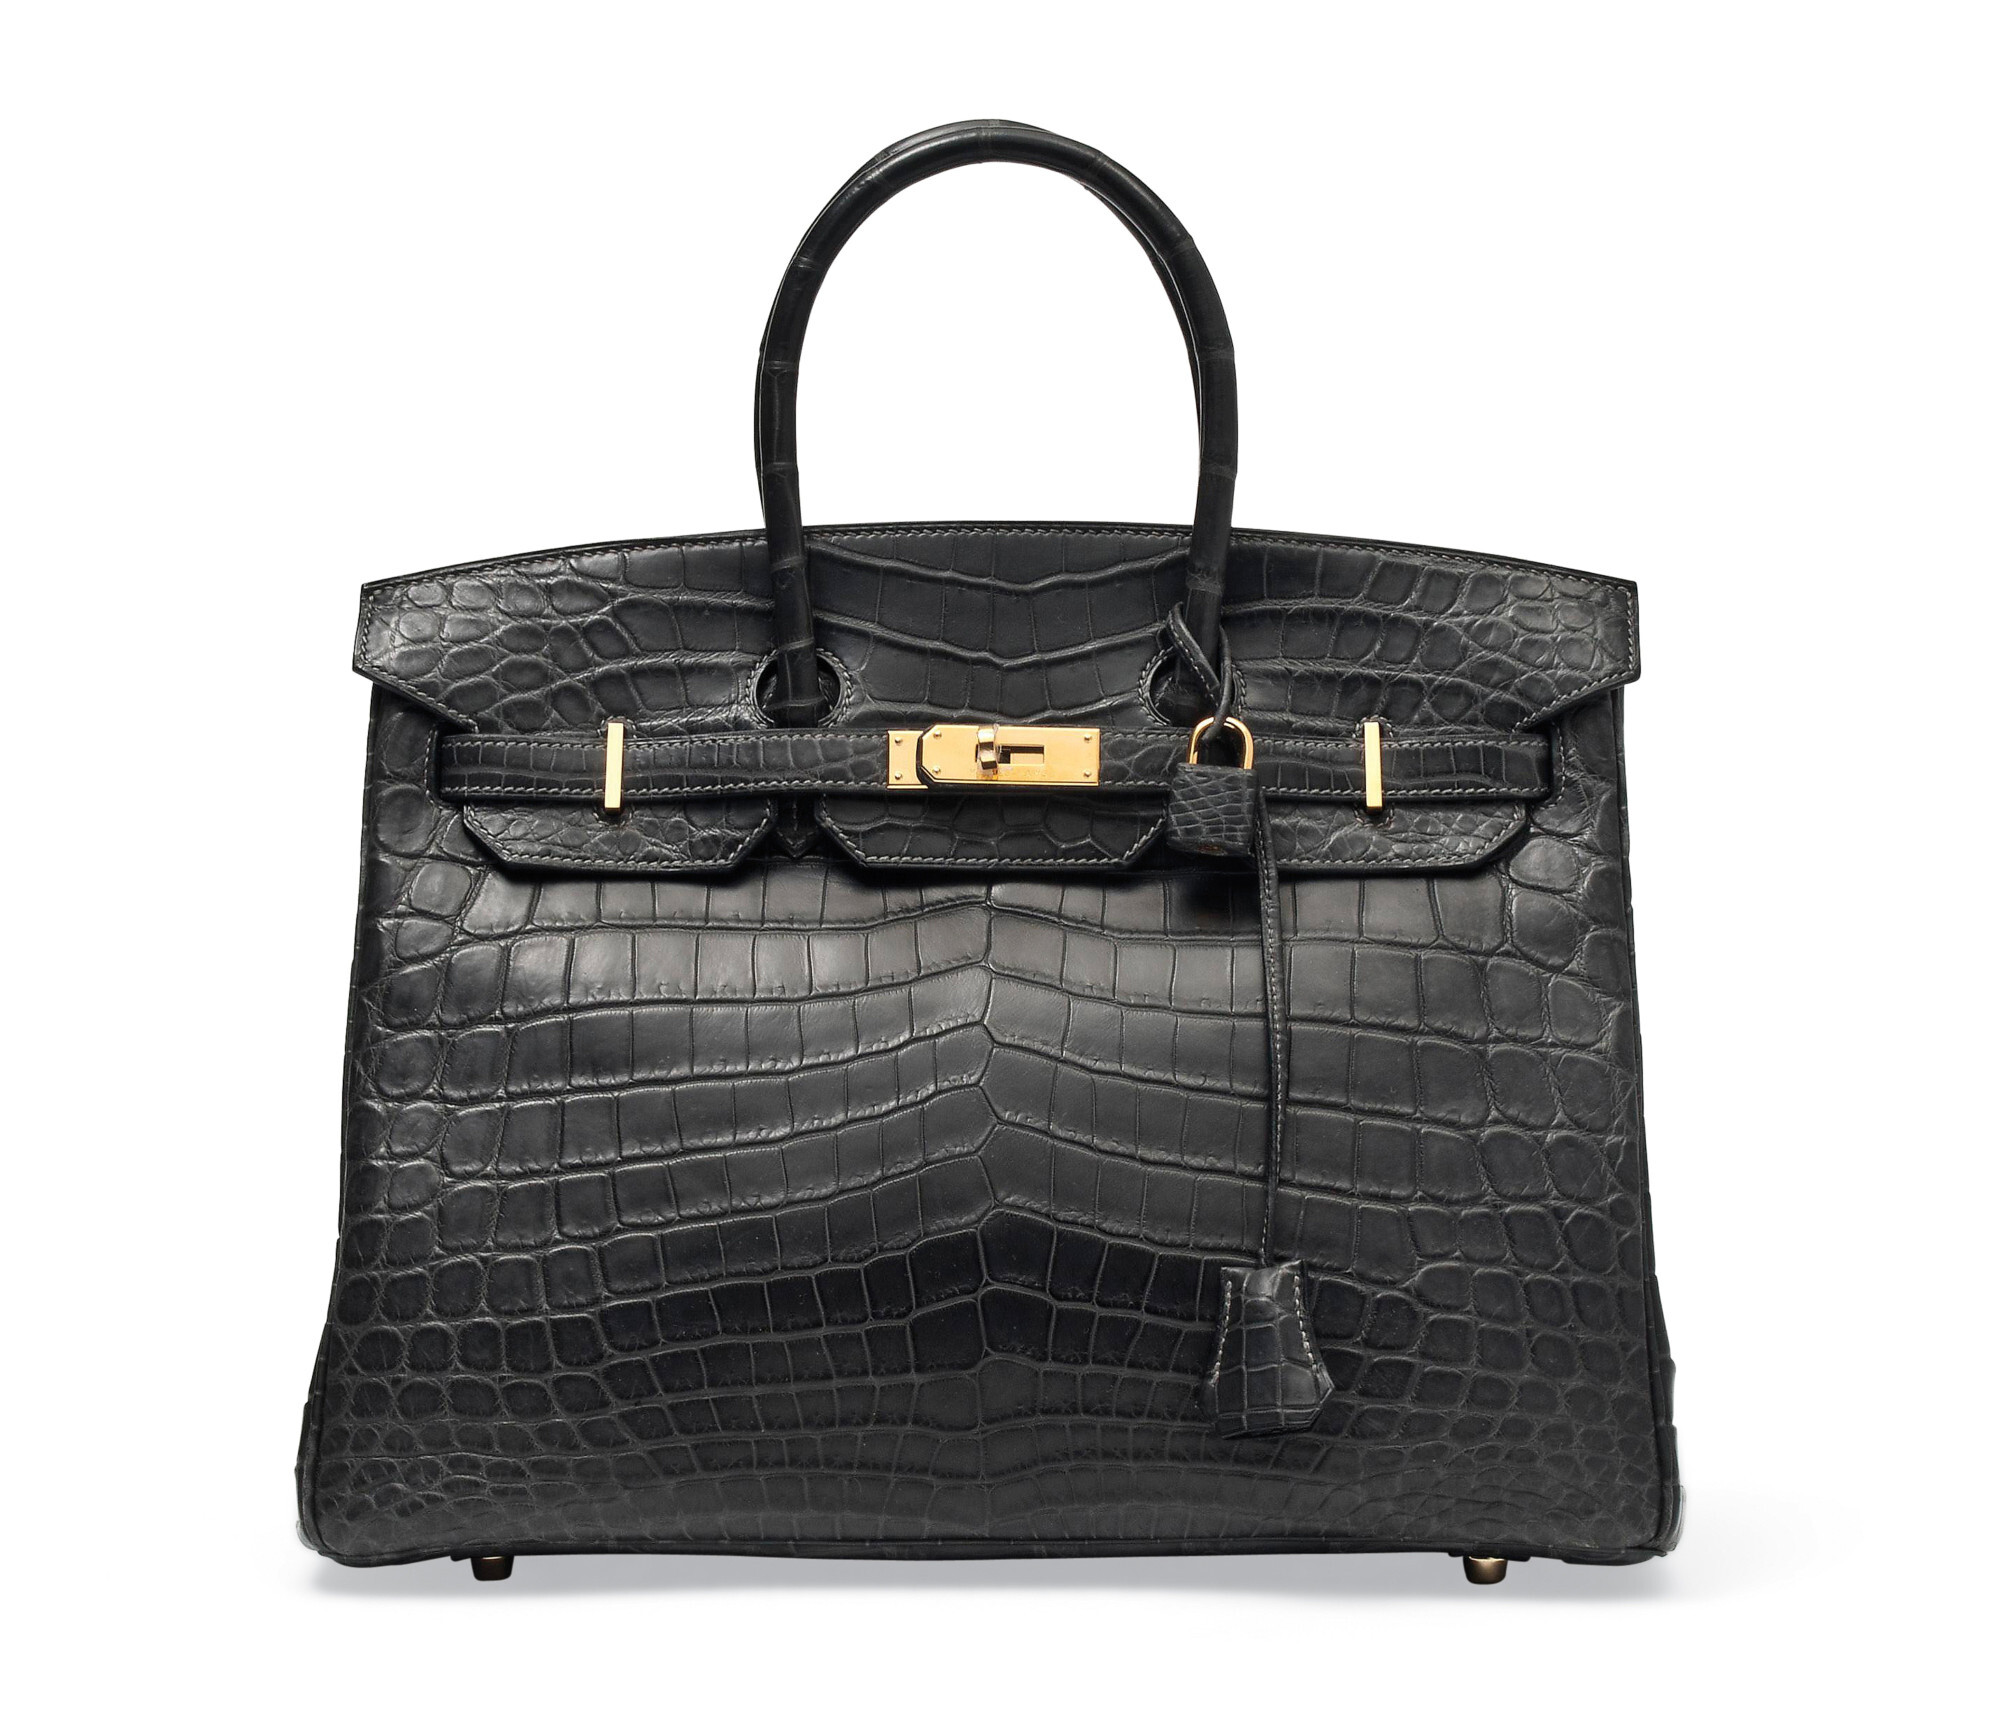 Cardi B Shows off Massive Hermès Birkin Collection